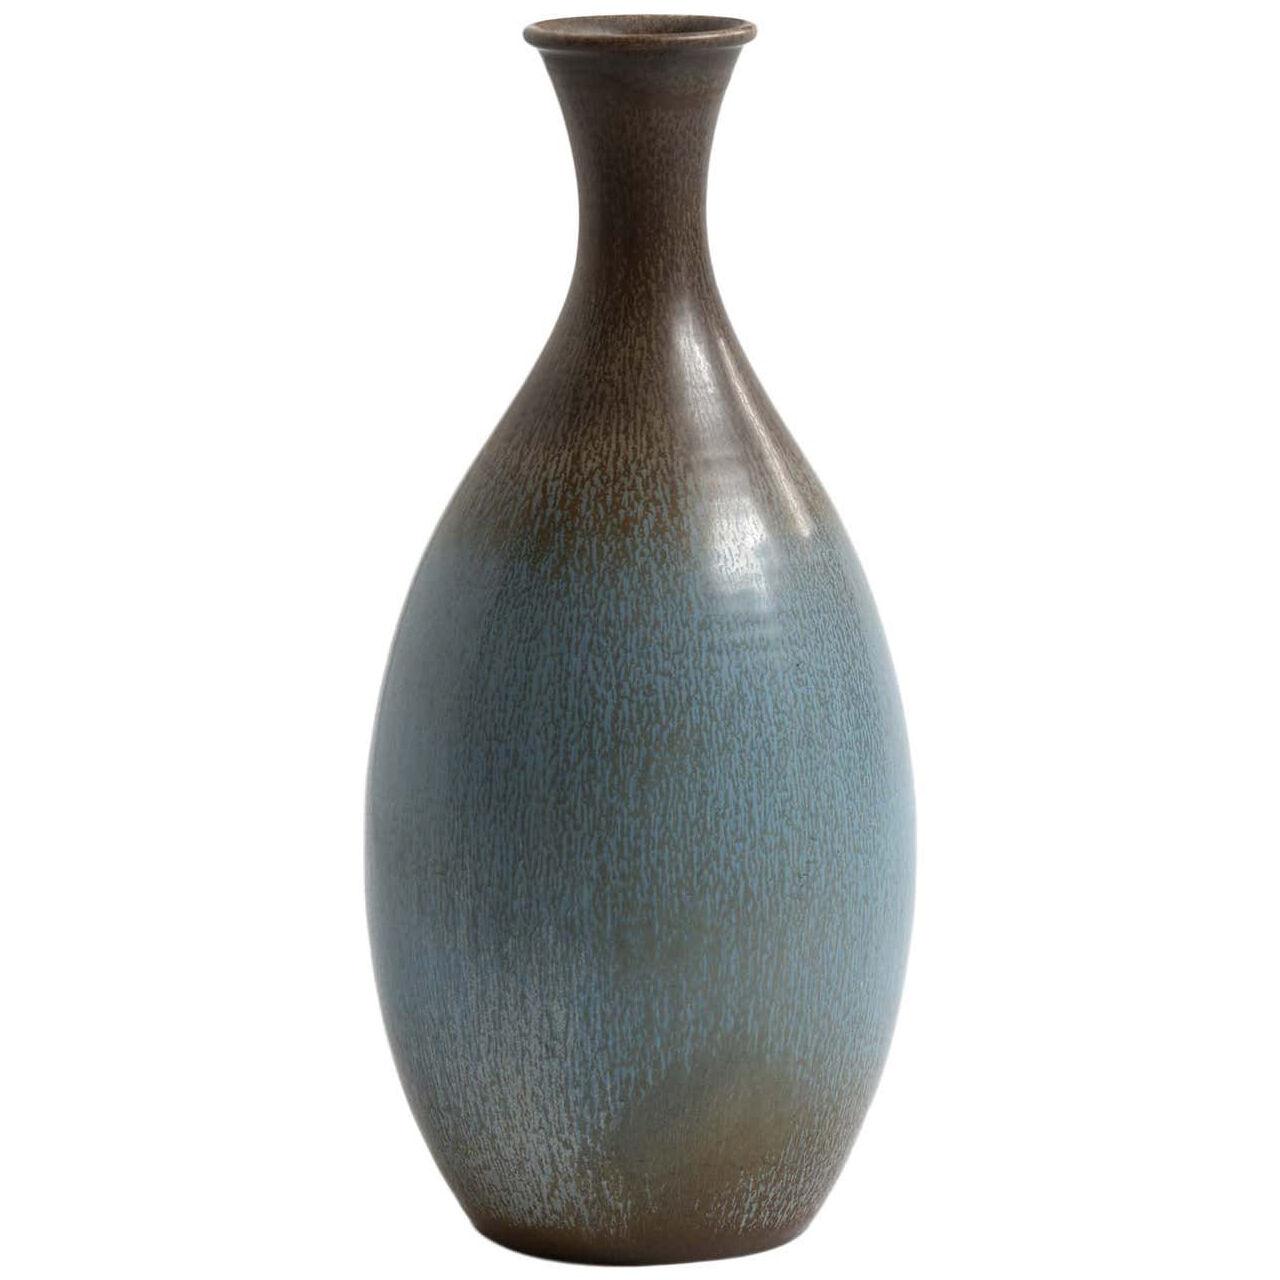 Sven Wejsfelt Floor Vase Produced by Gustavsberg in Sweden